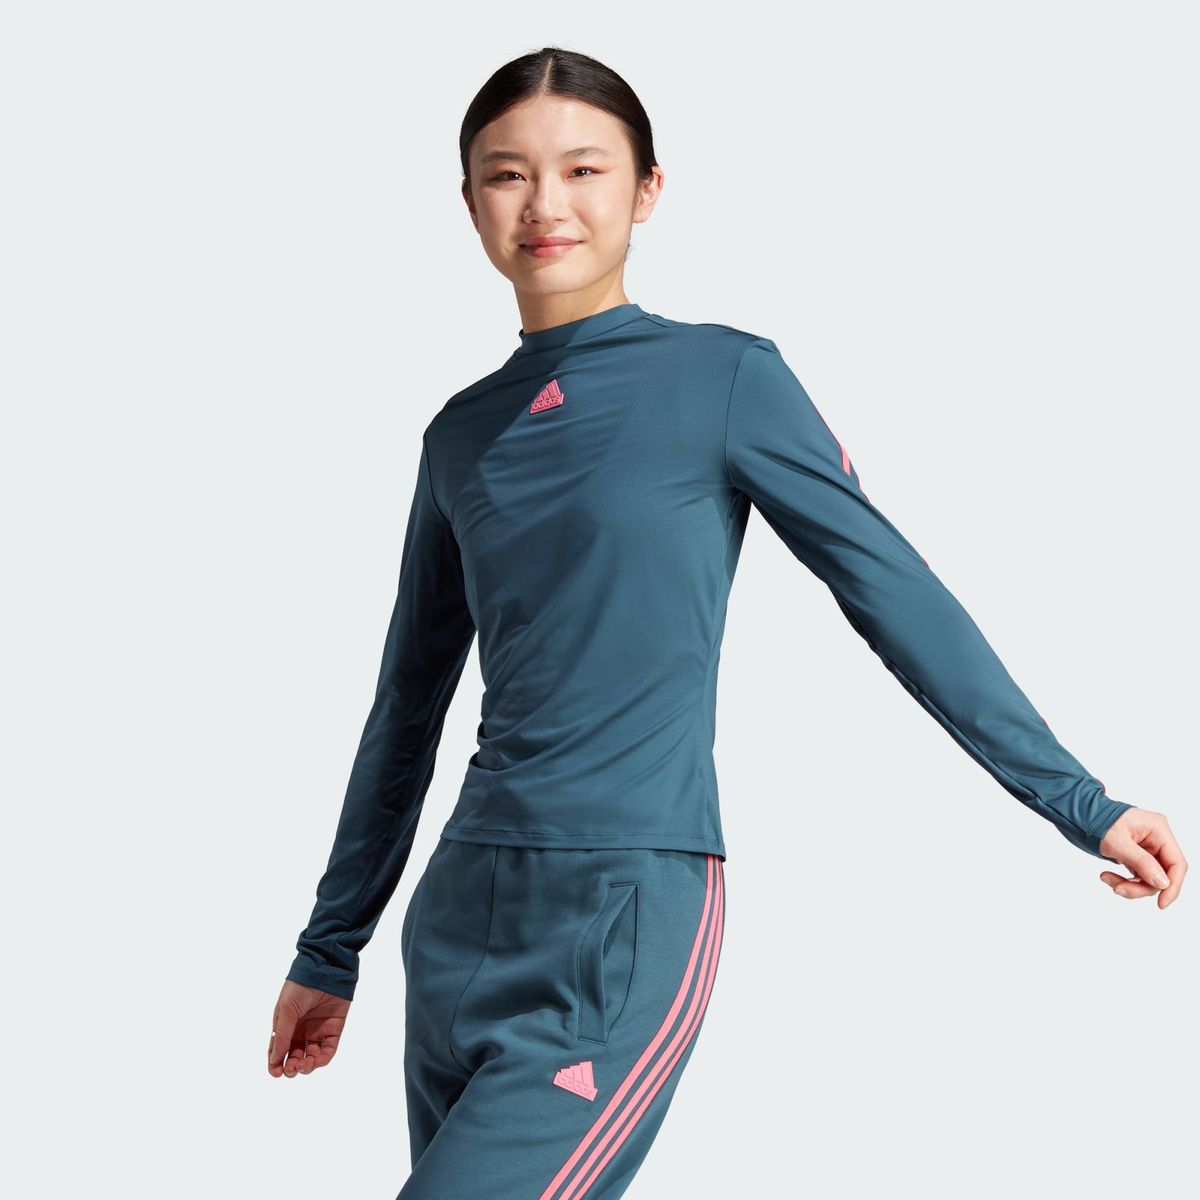 Survêtement Nike Sportswear Core - Rose - Fille - Manches longues -  Respirant - Multisport